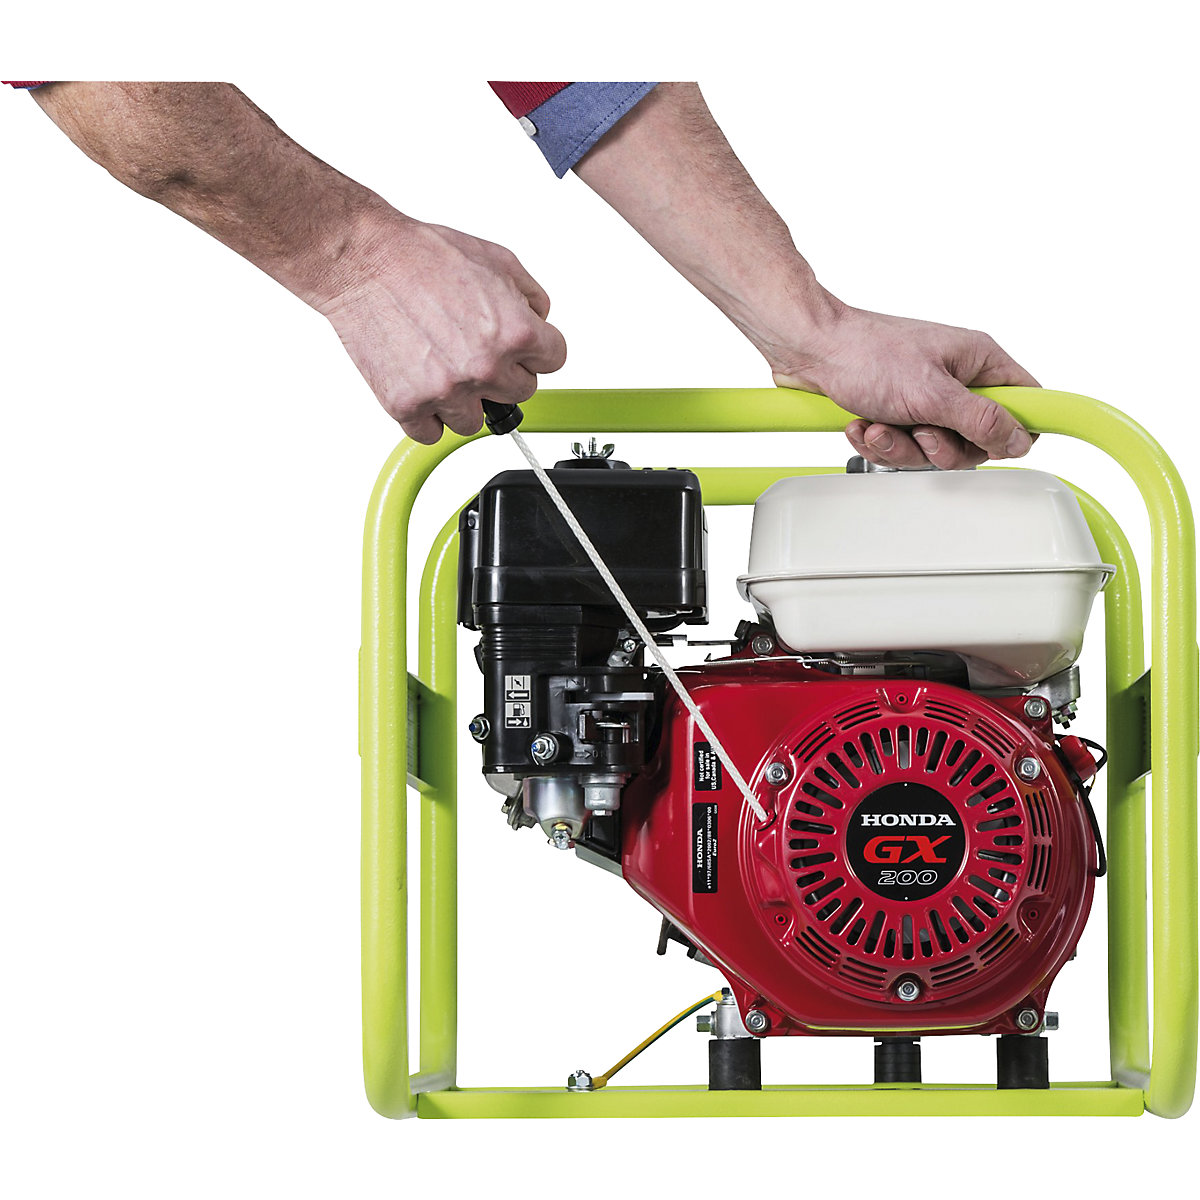 E series power generator – petrol, 230 V – Pramac (Product illustration 4)-3